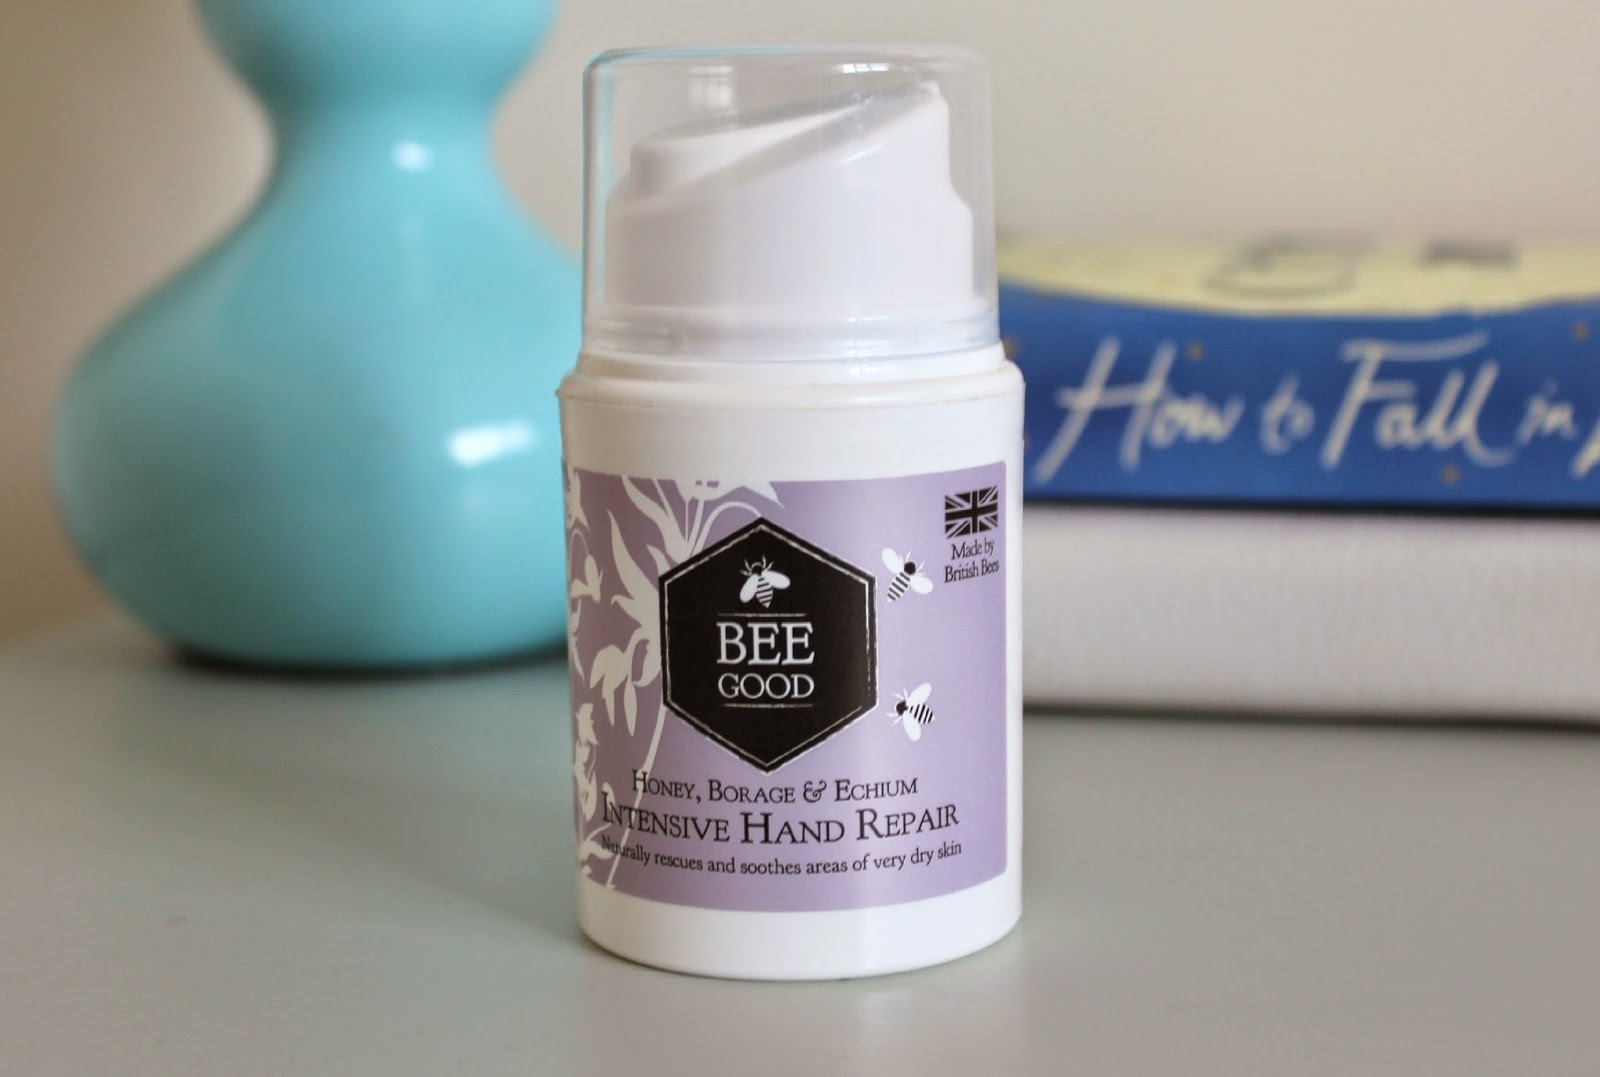 Bee Good Intensive Hand Repair with Honey, Borage & Echium